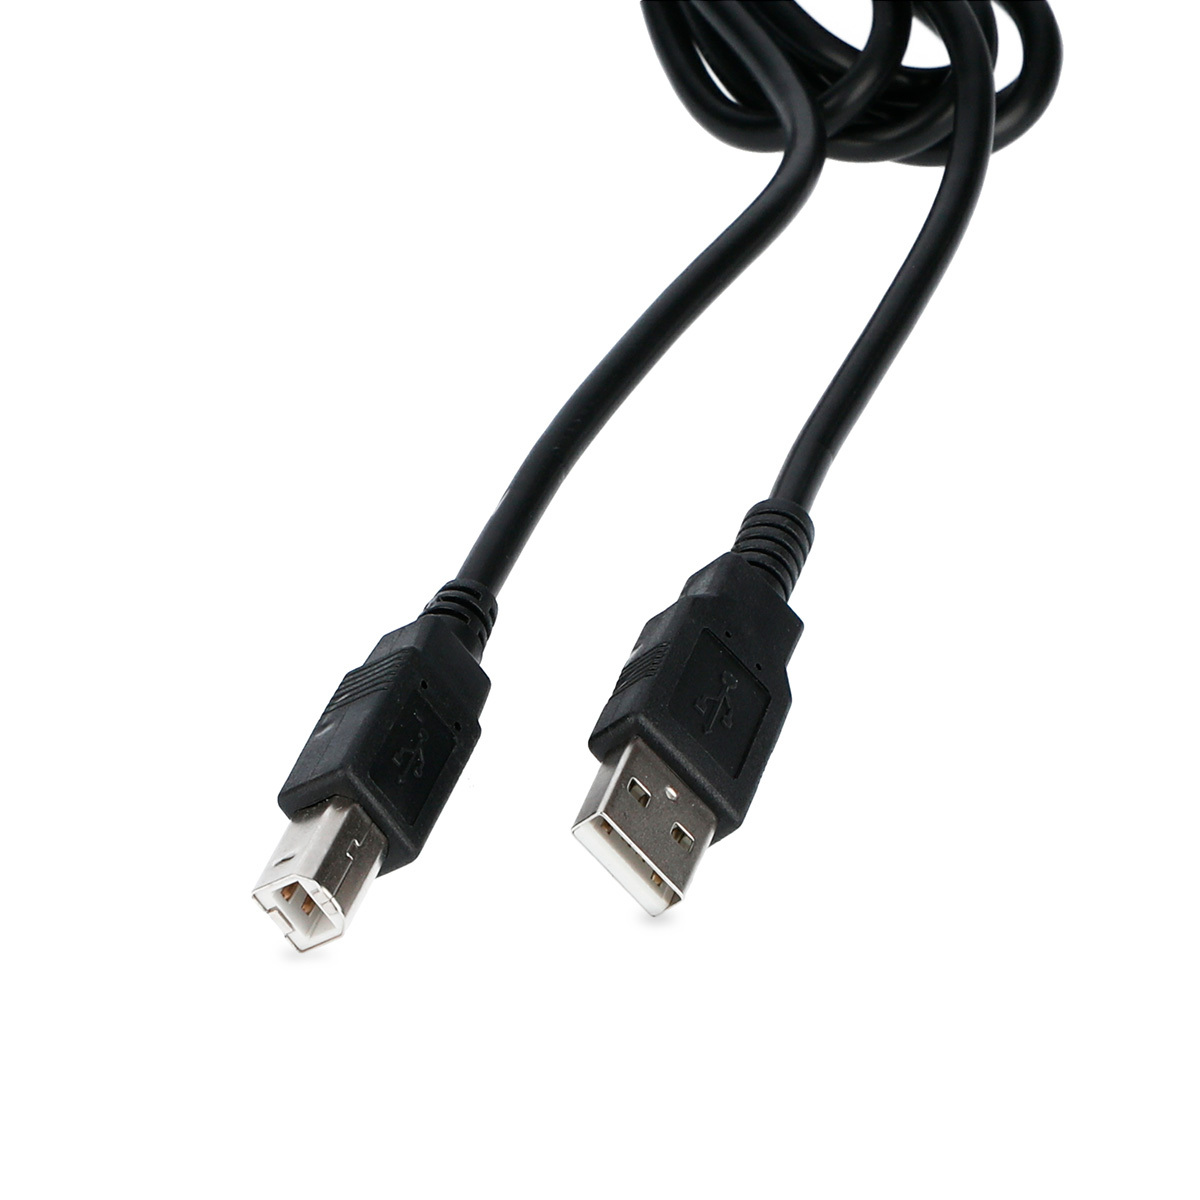 Cable USB  A Macho a B Macho Spectra  metros Negro | Office Depot  Mexico